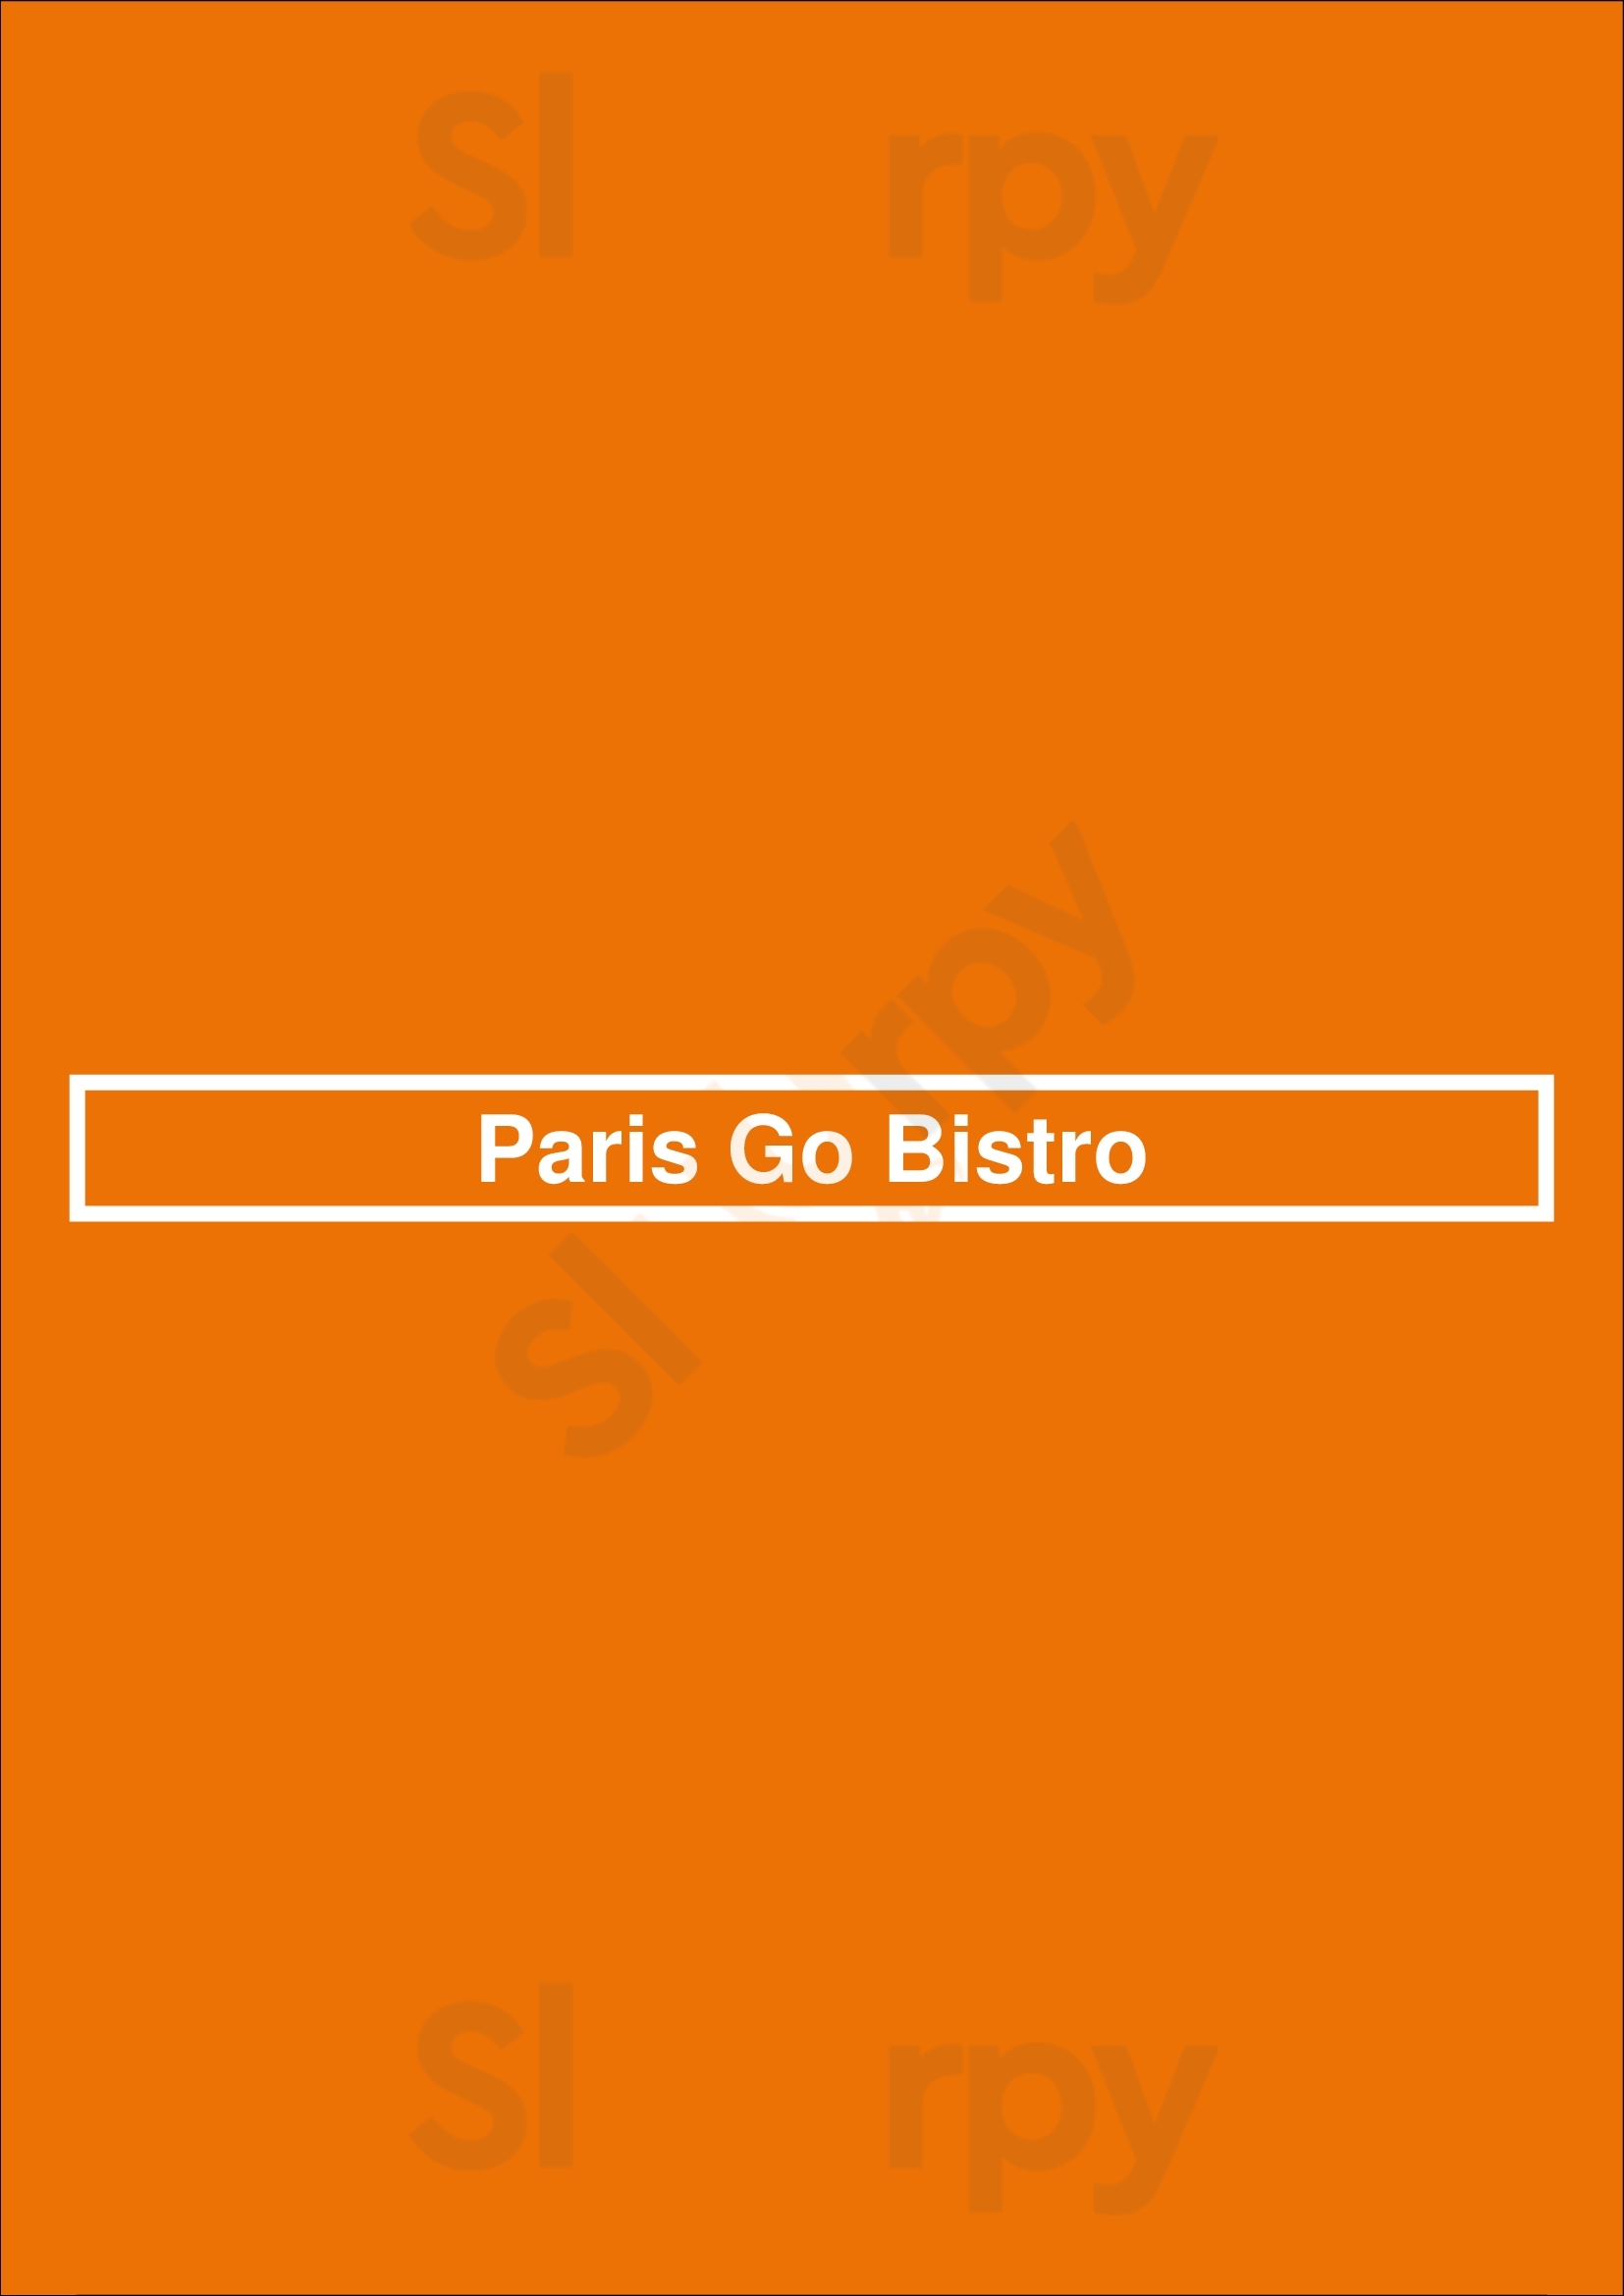 Paris Go Bistro Melbourne Menu - 1